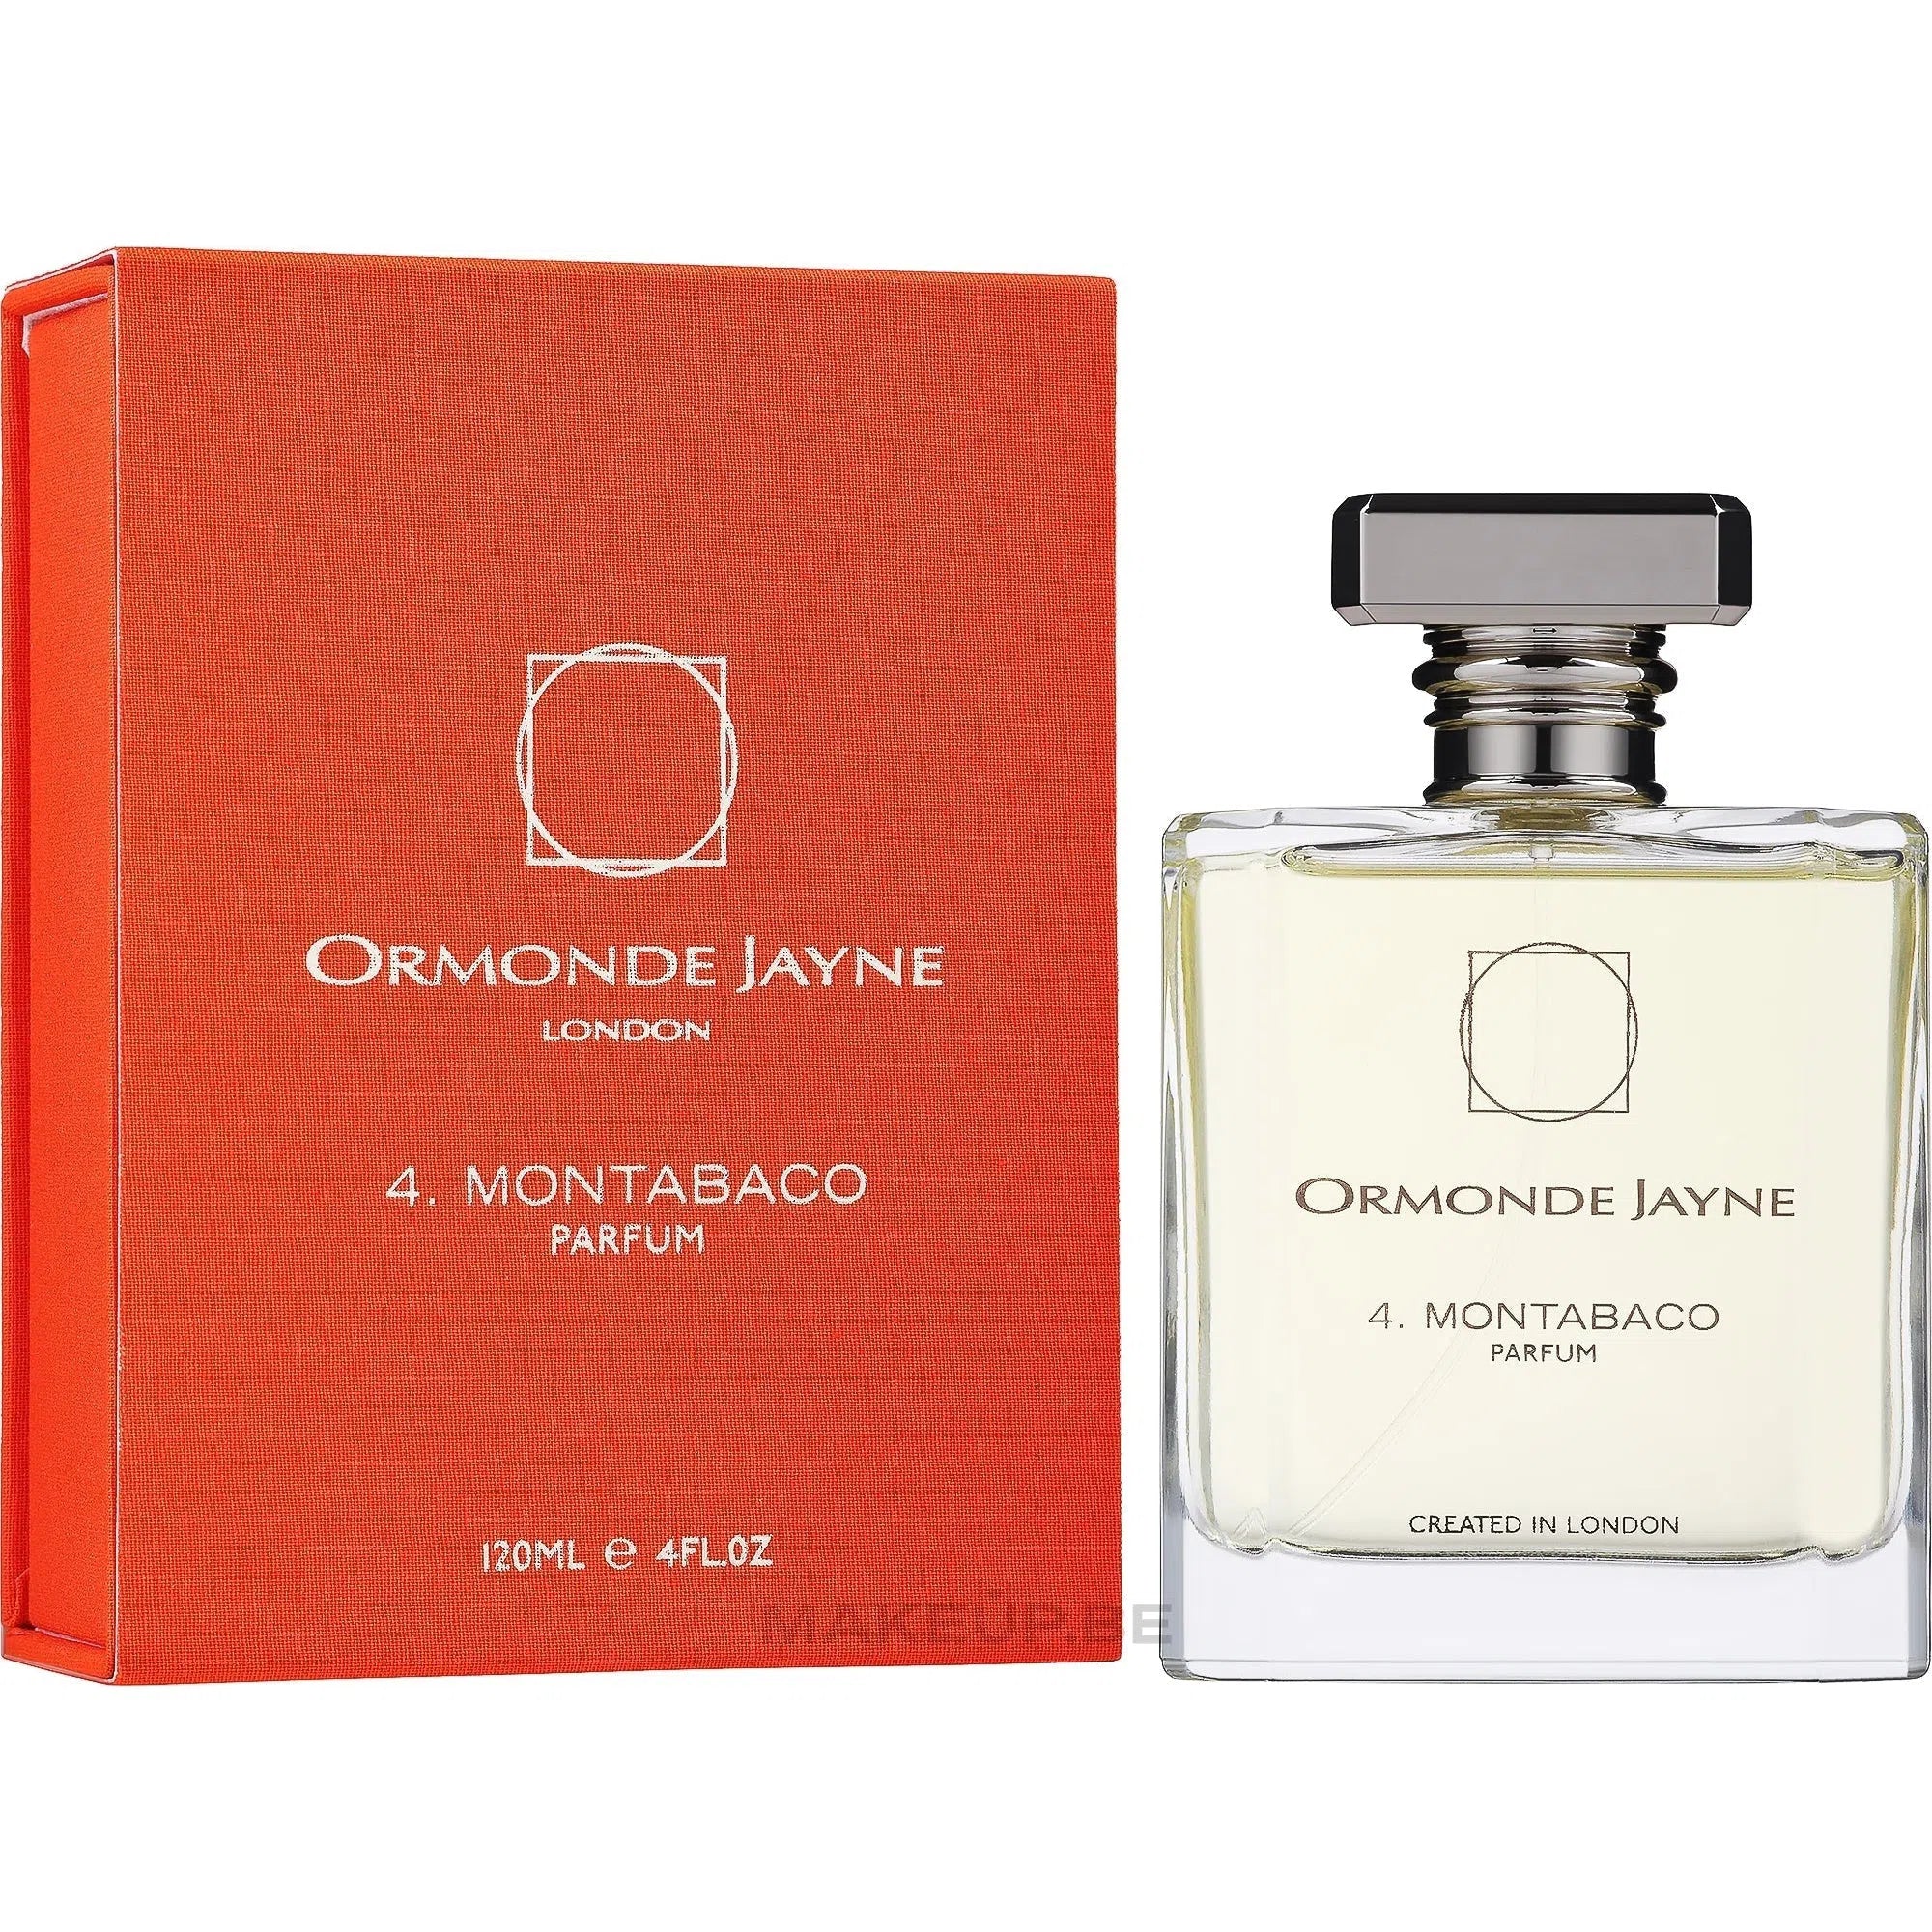 Perfume Ormonde Jayne Montabaco Parfum (U) / 120 ml - 5060238281362- Prive Perfumes Honduras